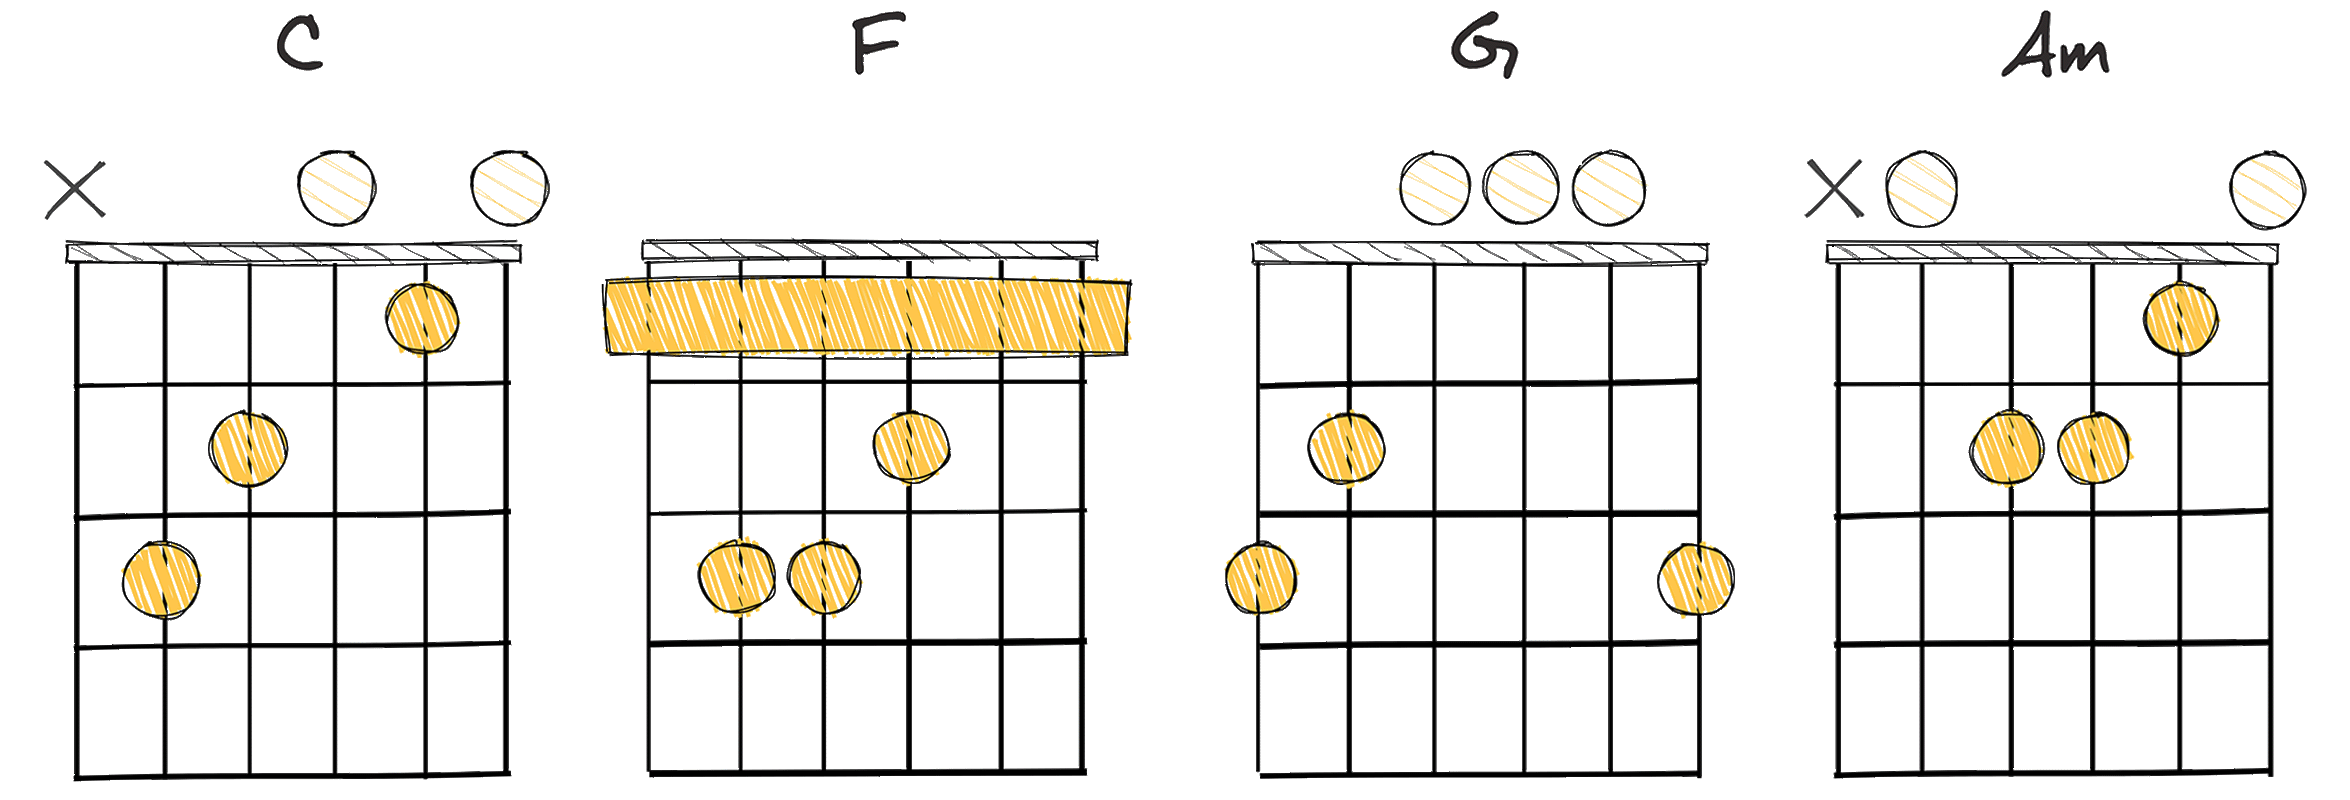 I - IV - V - vi (1 - 4 - 5 - 6) chords diagram